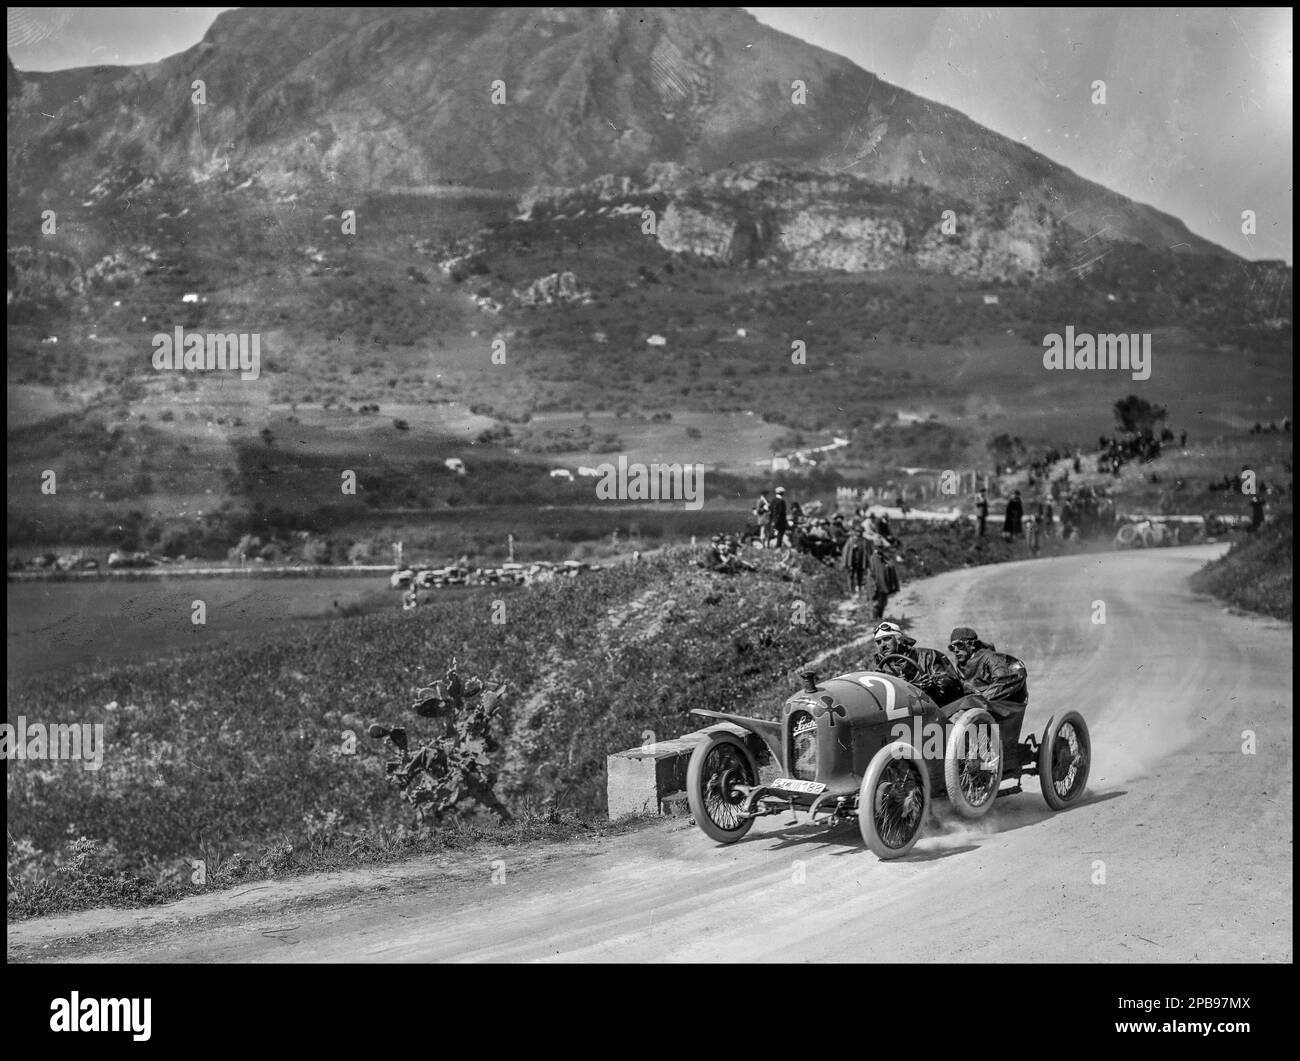 TARGA FLORIO Motor Race 1922 Lambert Pöcher nella sua Austro-Daimler alla Targa Florio Rough Track Racing 1922. 2 aprile 1922 Sicilia Italia Foto Stock